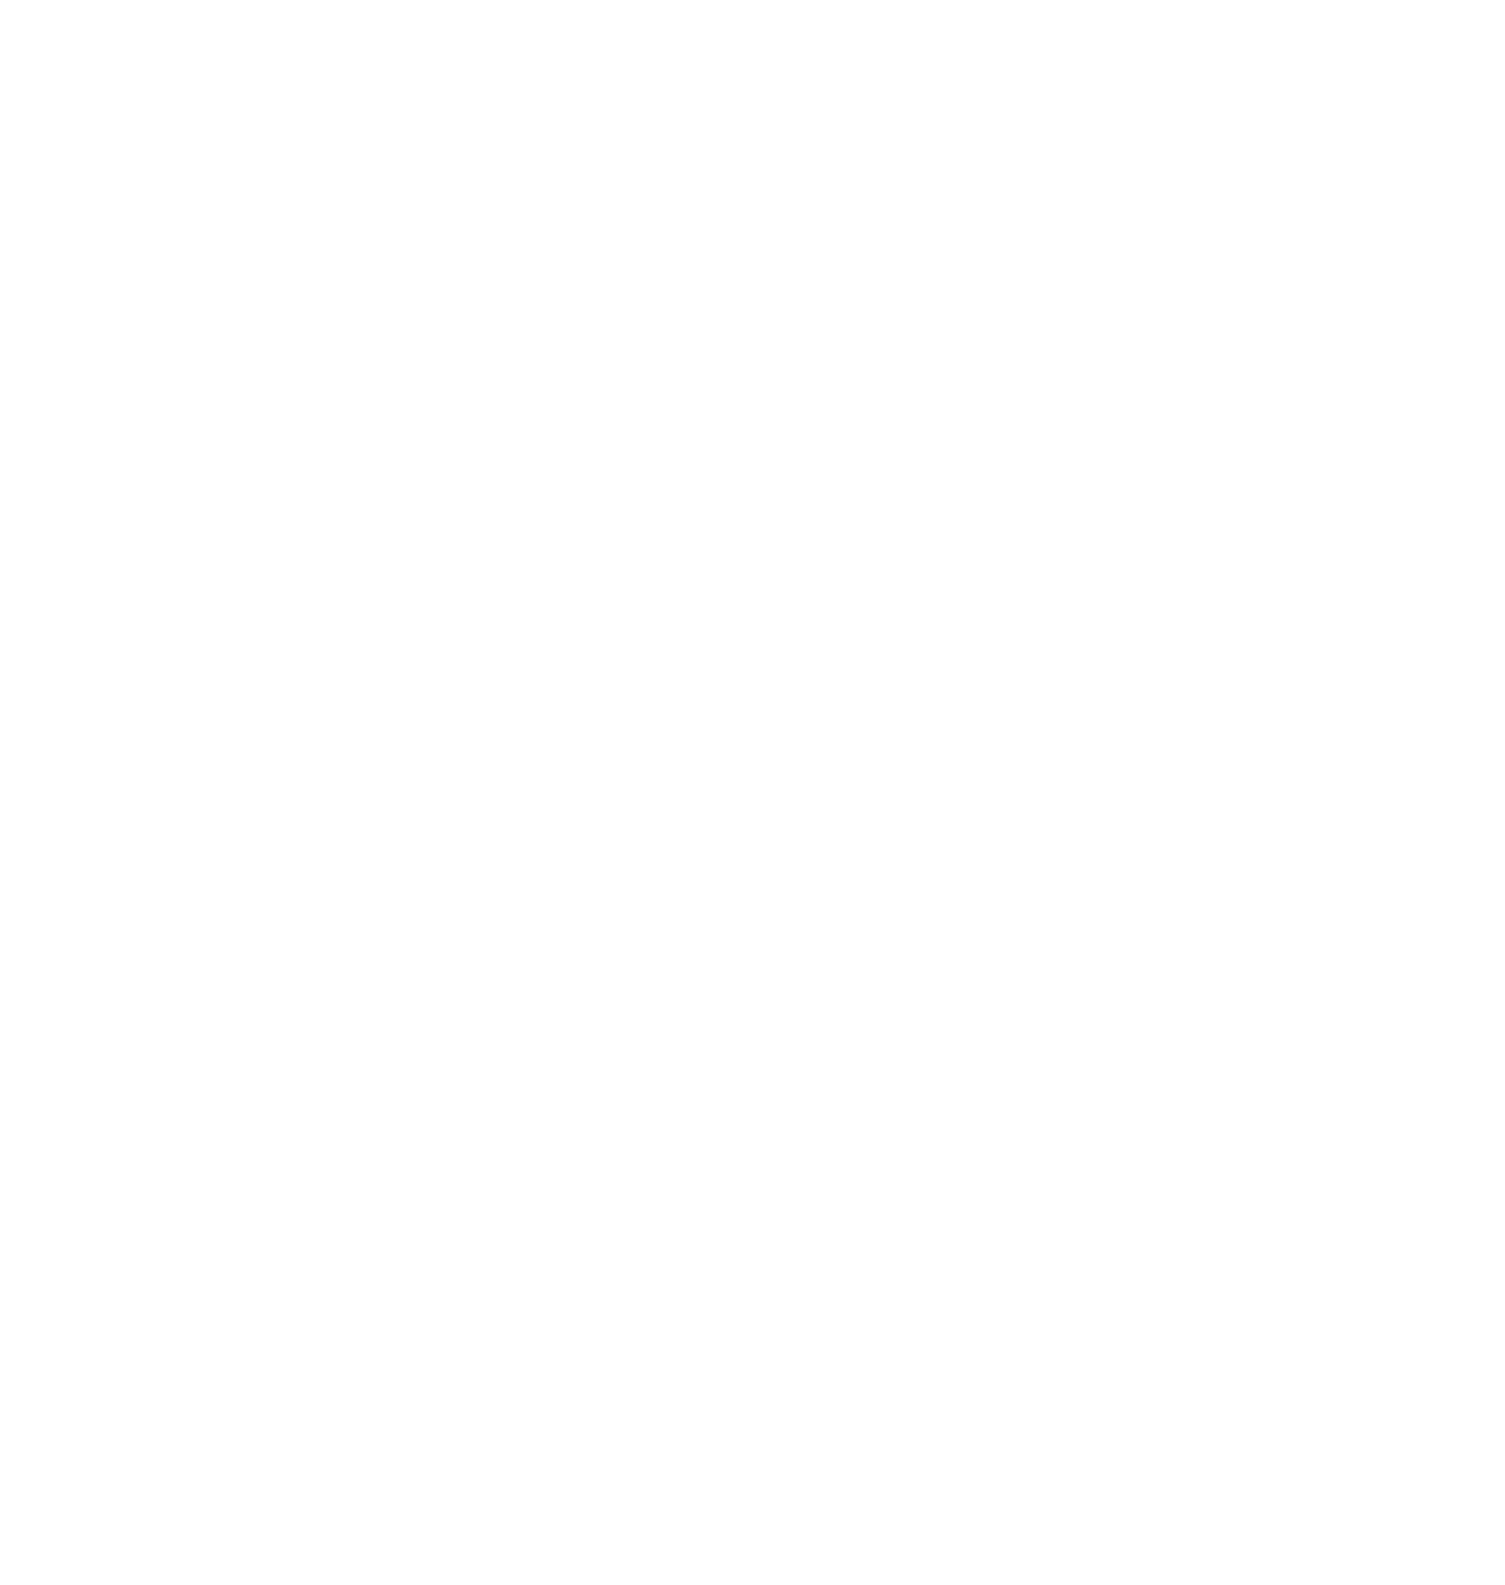 Cimbeton logo pour fonds sombres (PNG transparent)